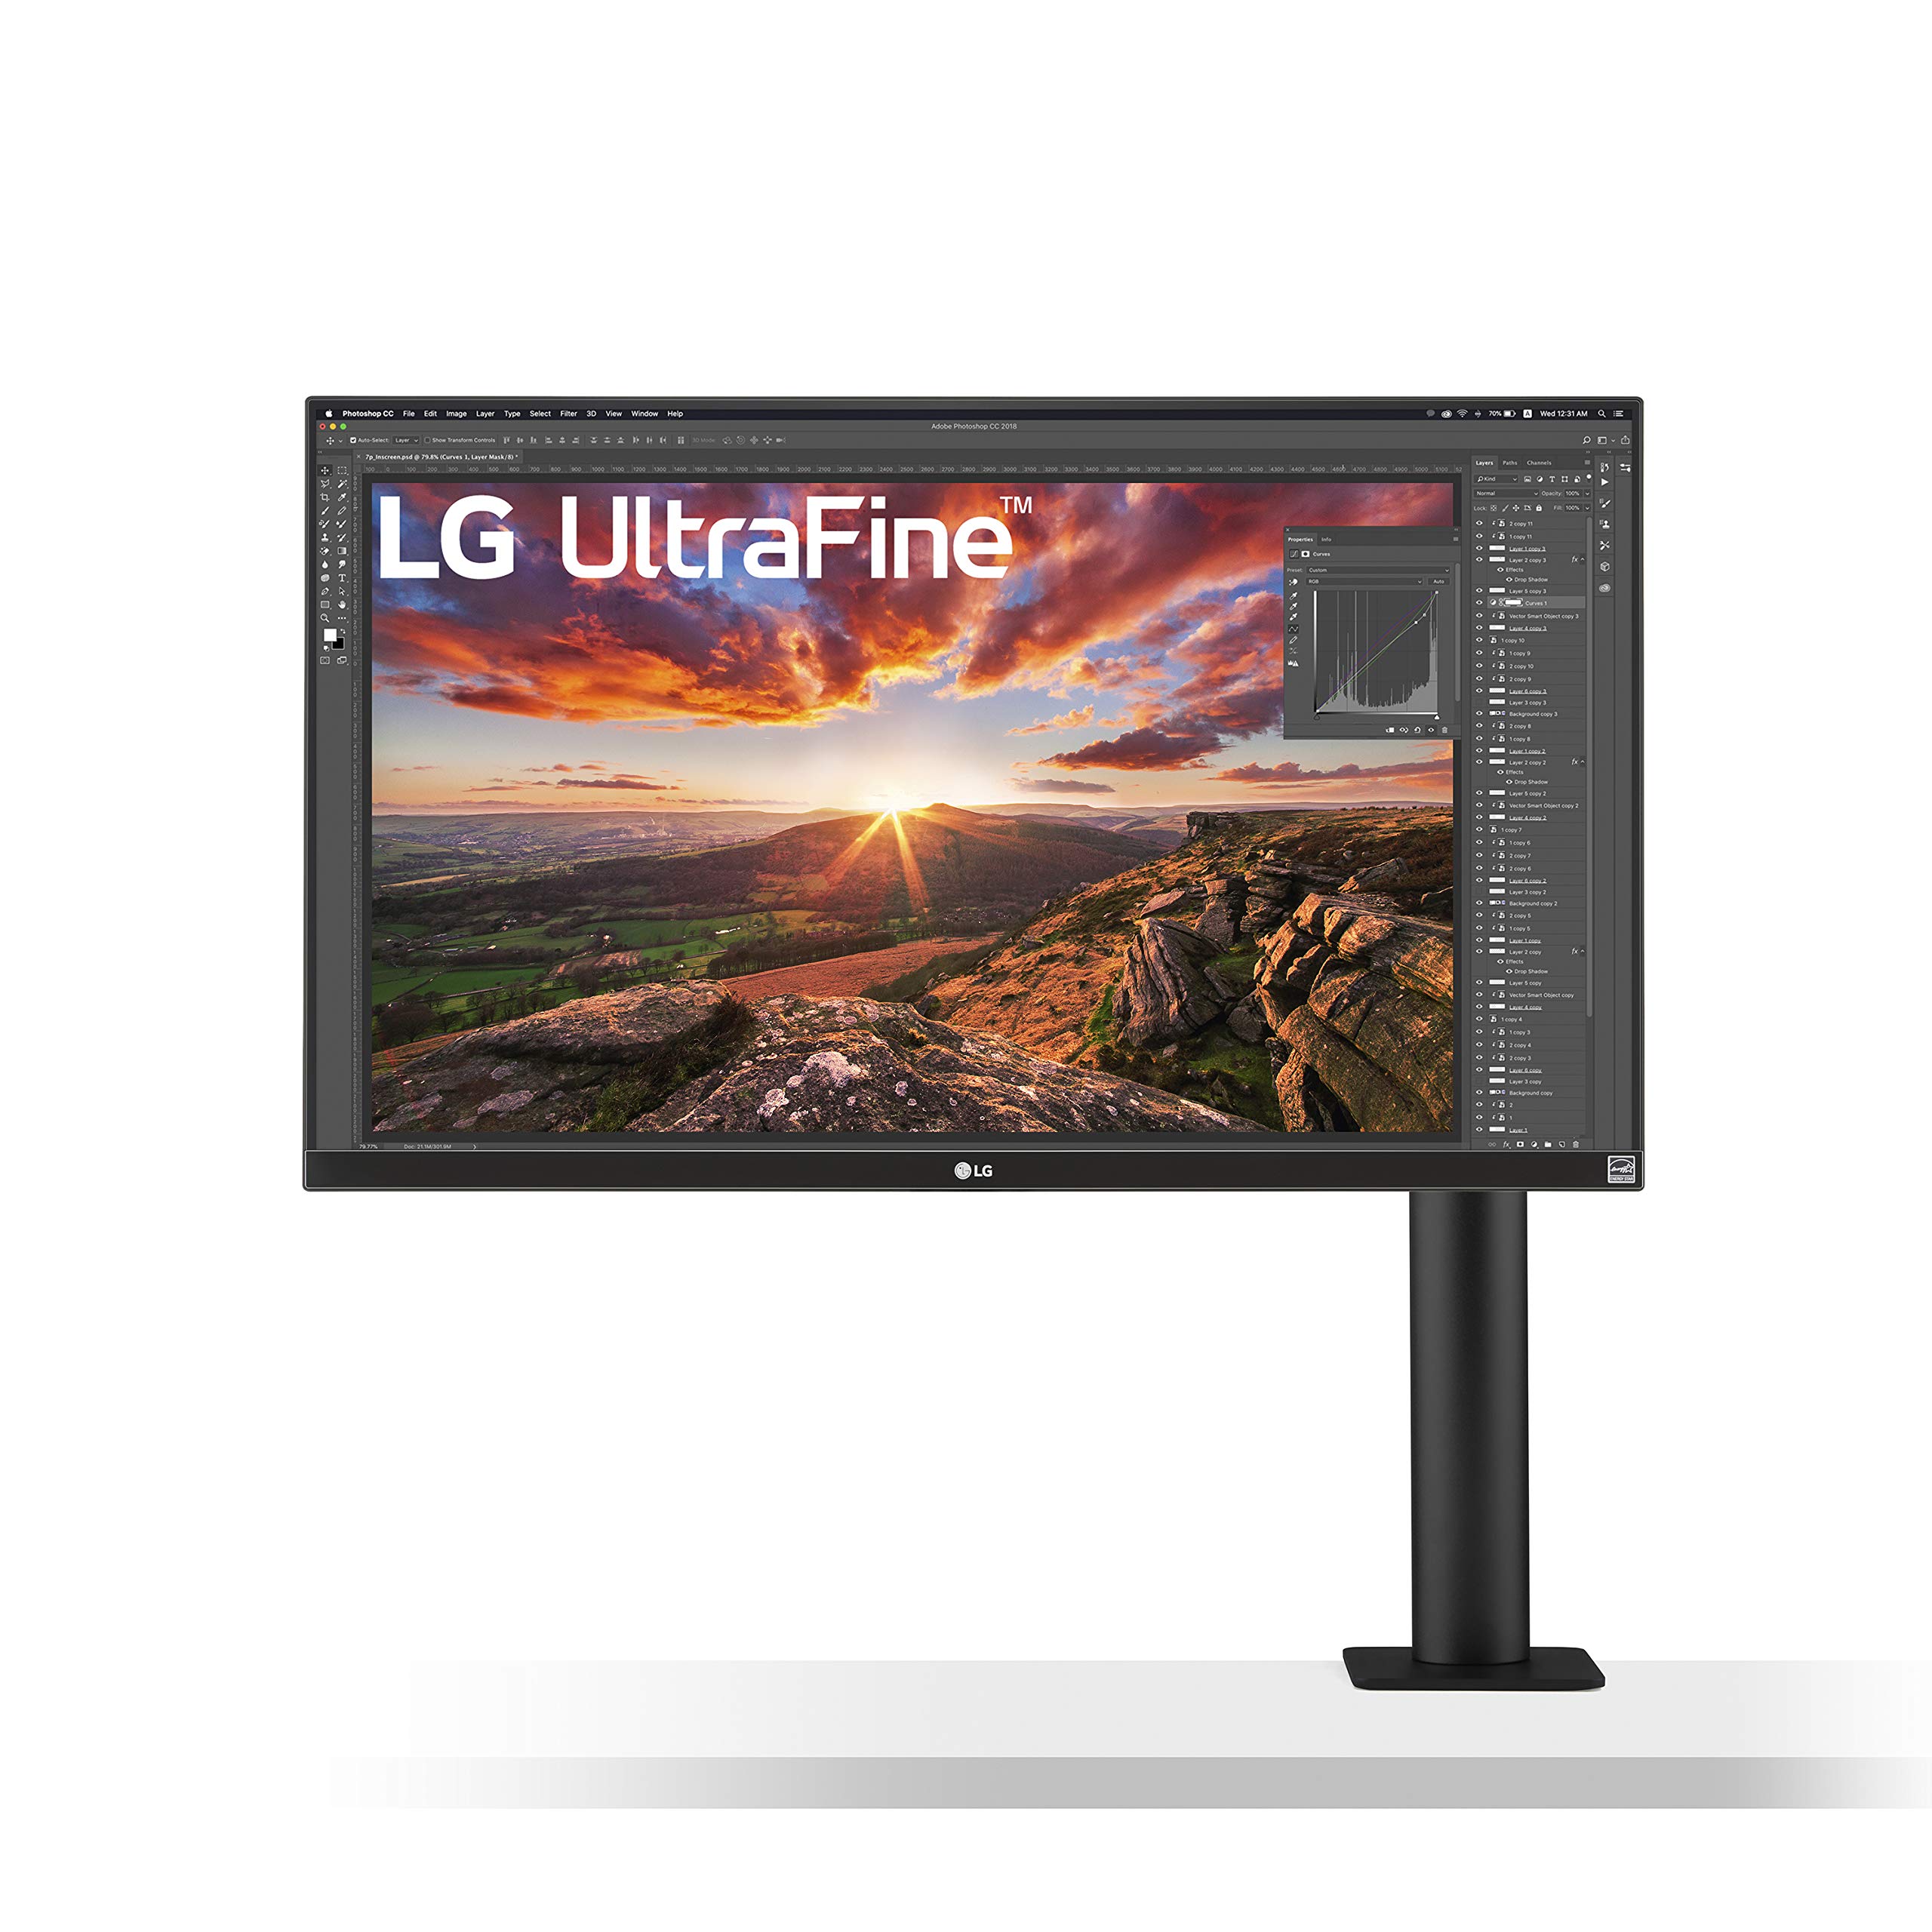 LG 27UN880-B Ultrafine Monitor 27” UHD (3840 x 2160) IPS Display, sRGB 99% Color Gamut, VESA DisplayHDR 400, USB Type-C, ...